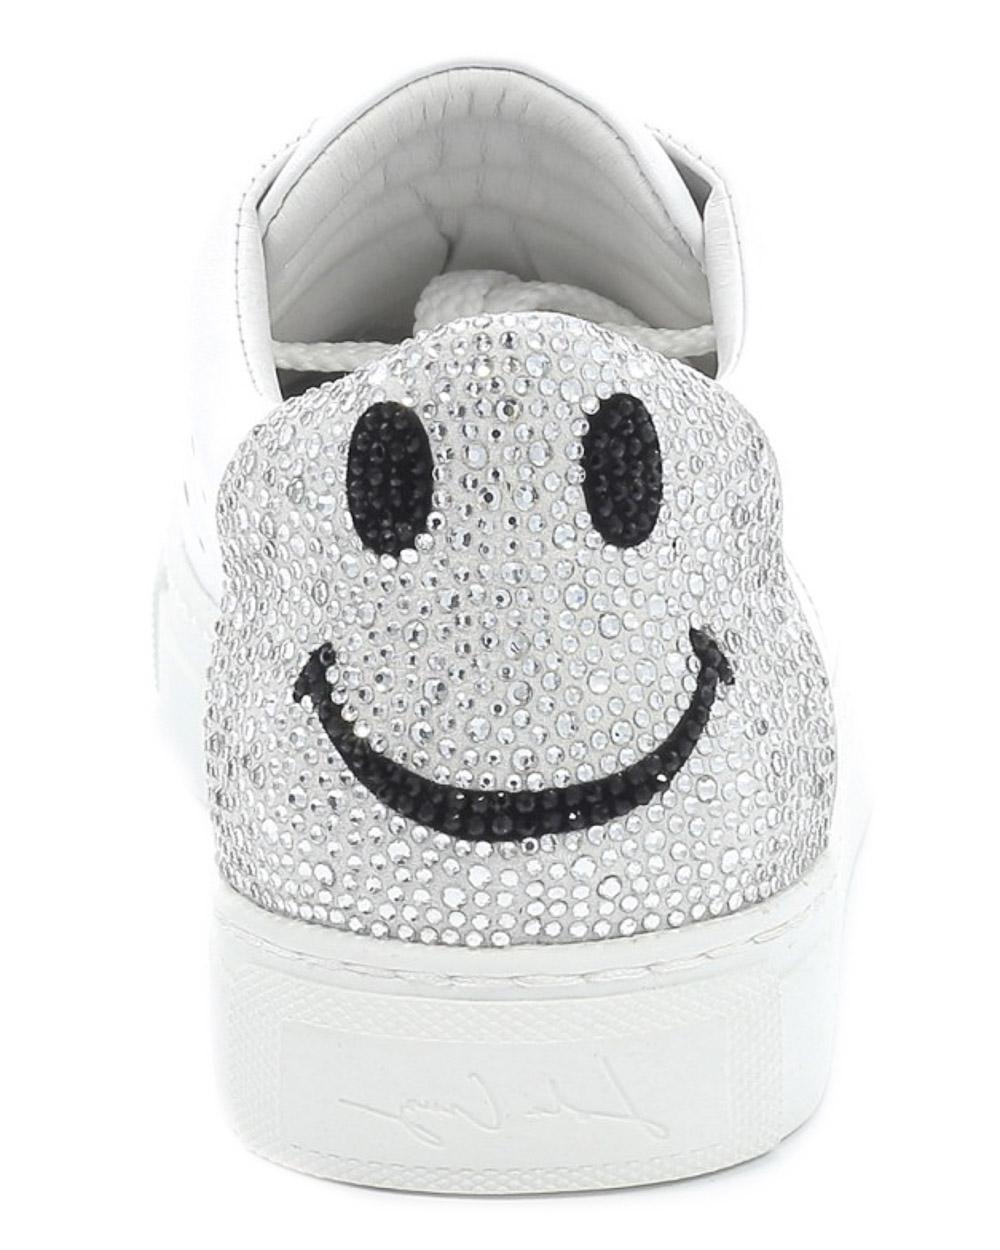 lola cruz sneakers smiley face Off 69% - sirinscrochet.com